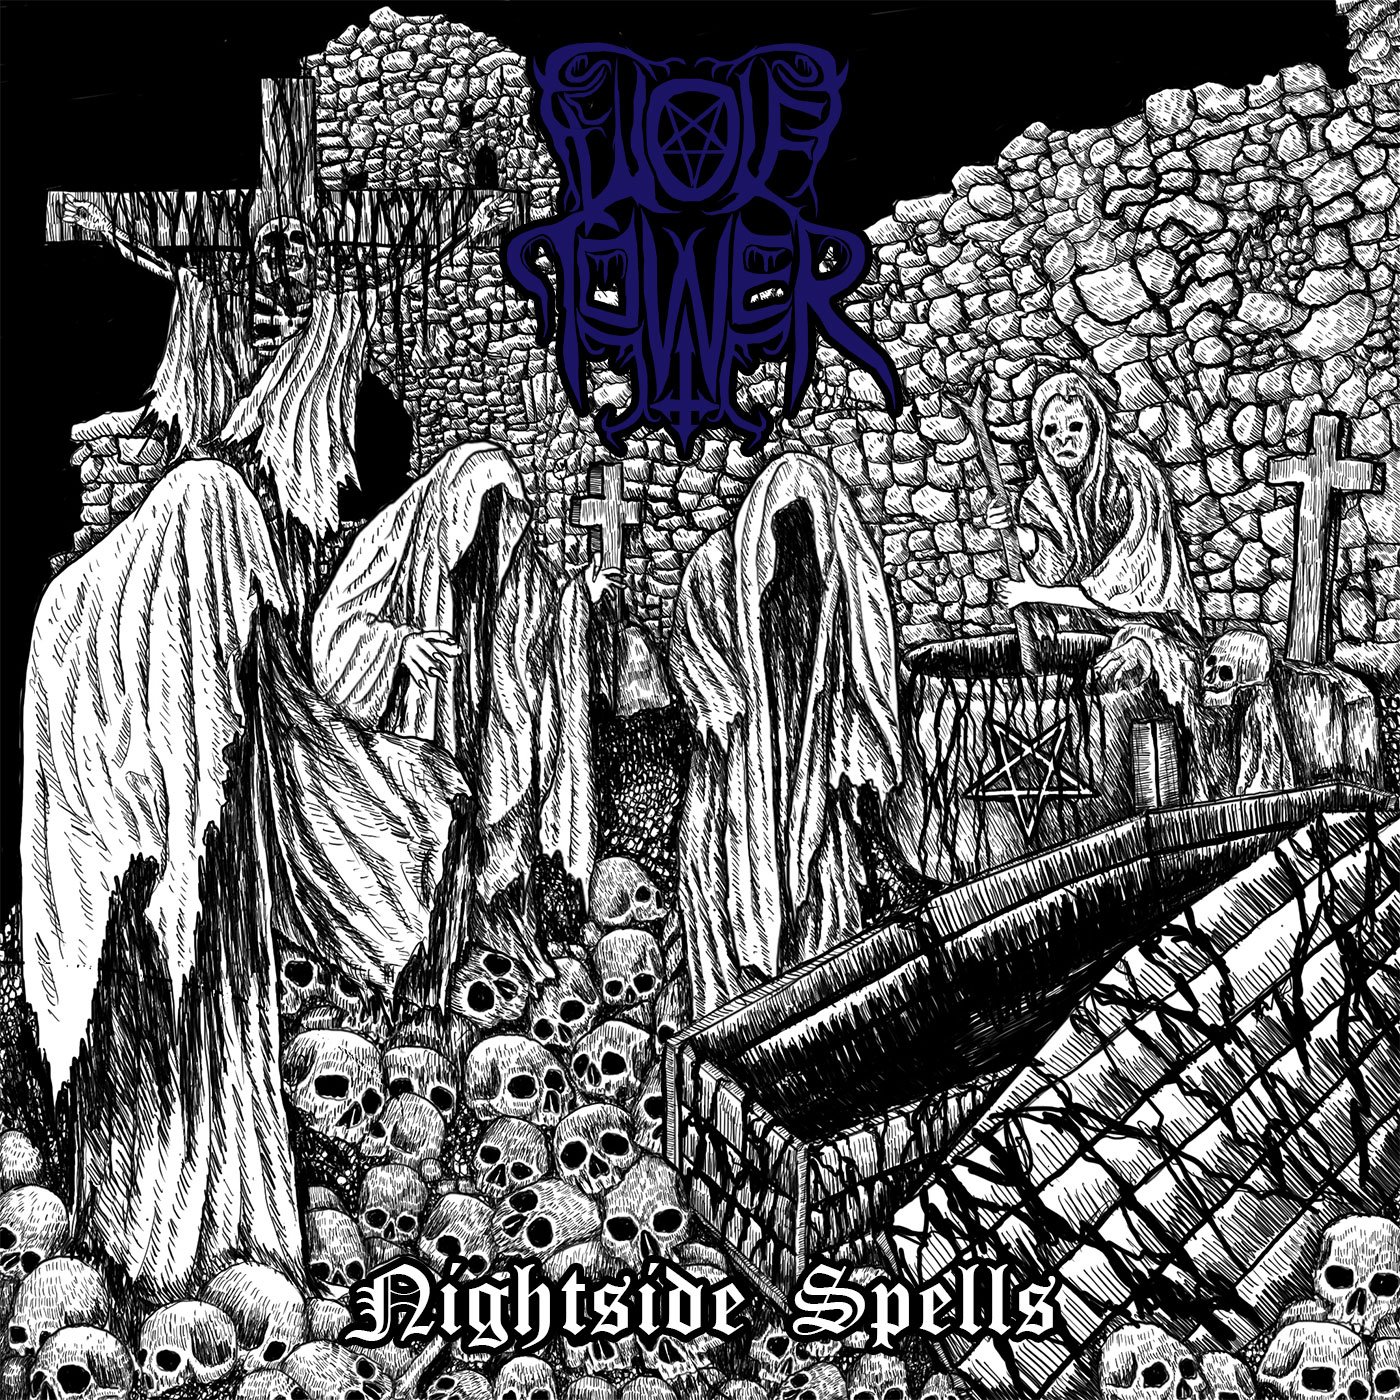 Wolftower-Nightside Spells-24BIT-44khz-WEB-FLAC-2021-OSKOREIA Download